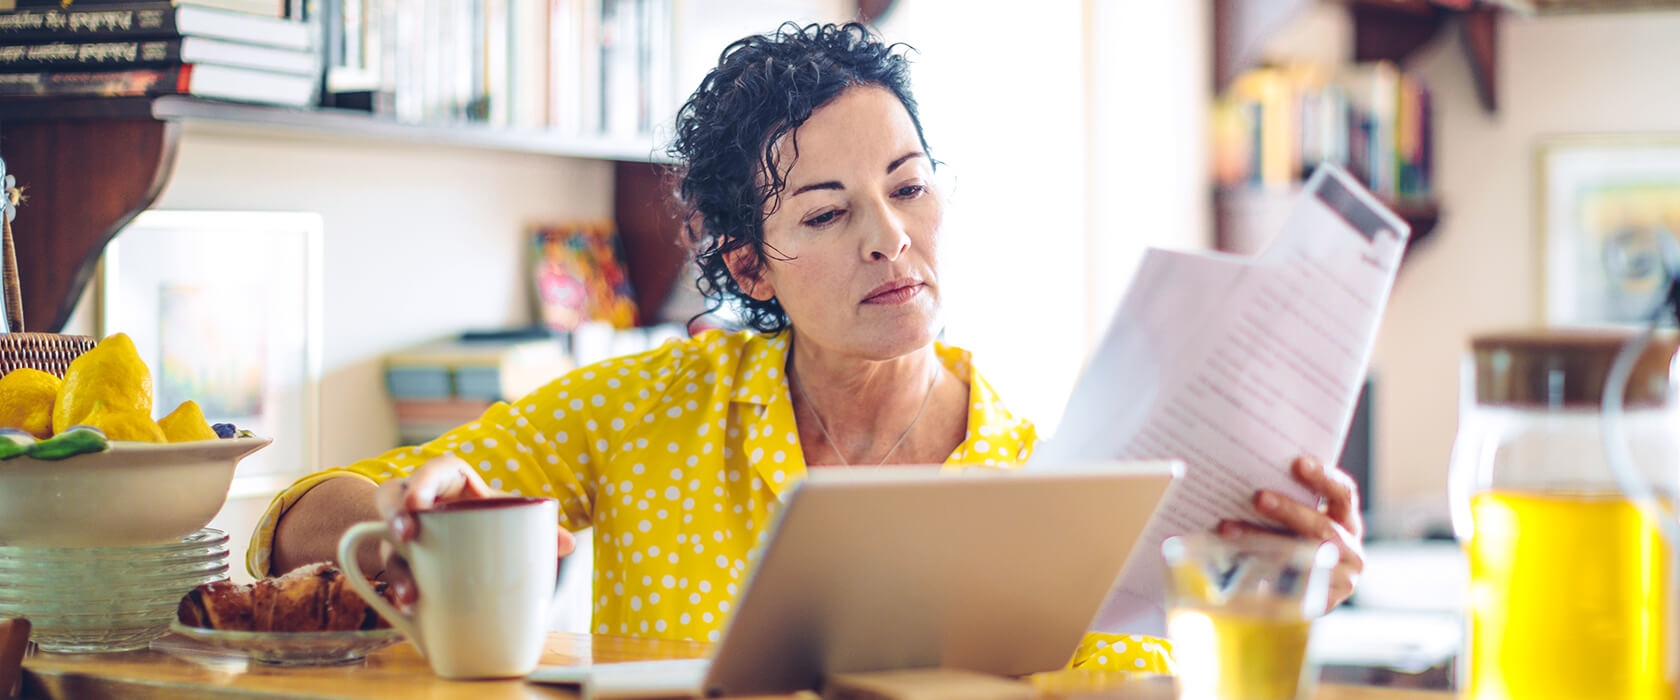 A woman reviews finances on laptop computer